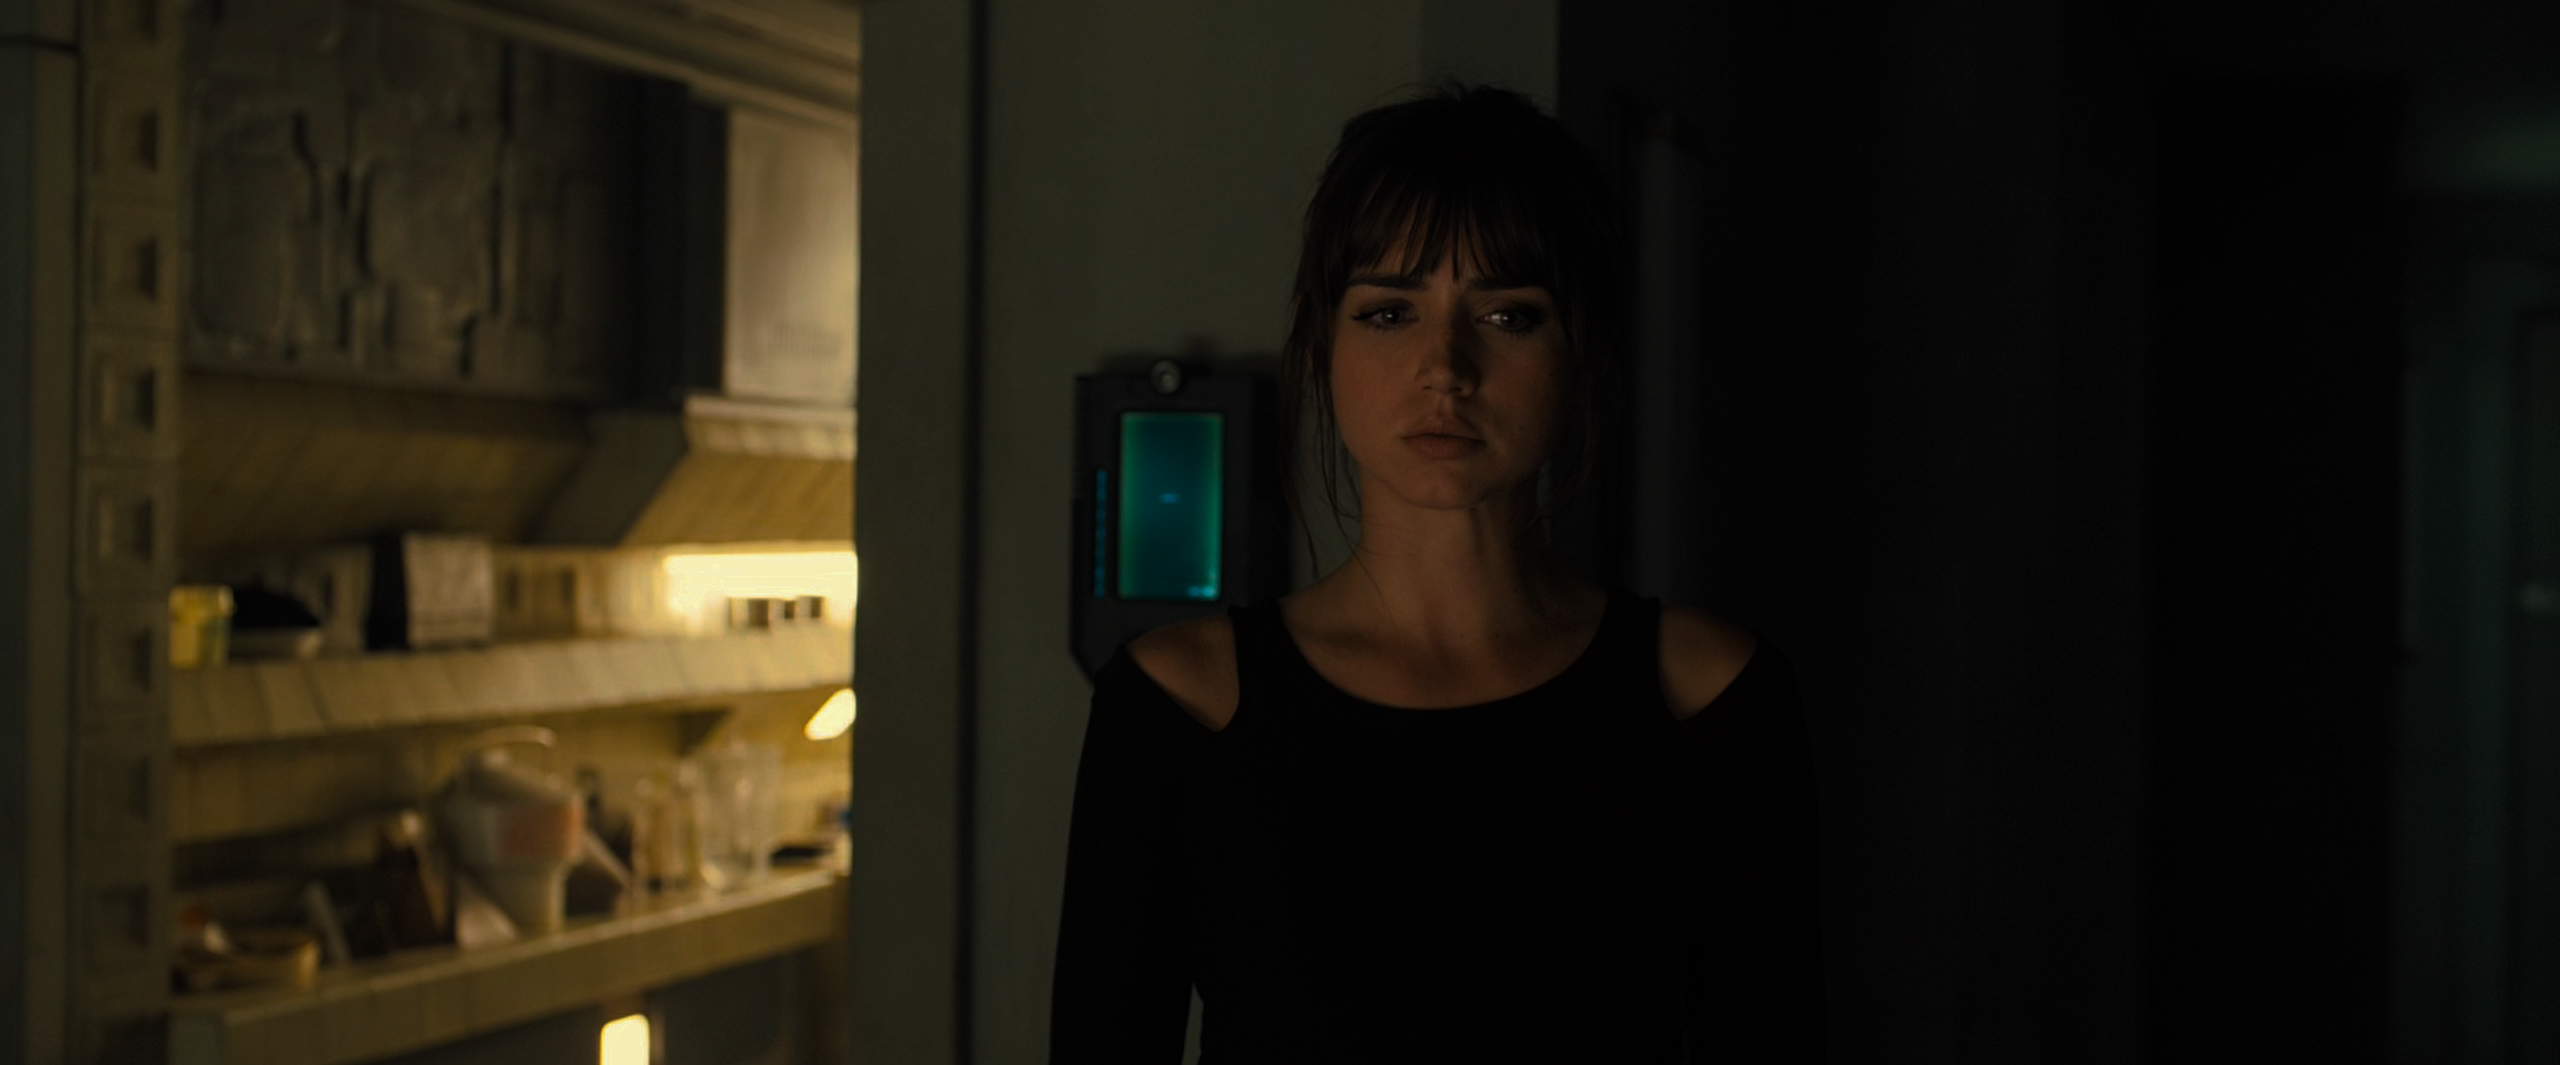 People 2560x1065 Blade Runner Blade Runner 2049 Joi singlets Ana de Armas actress film stills brunette celebrity